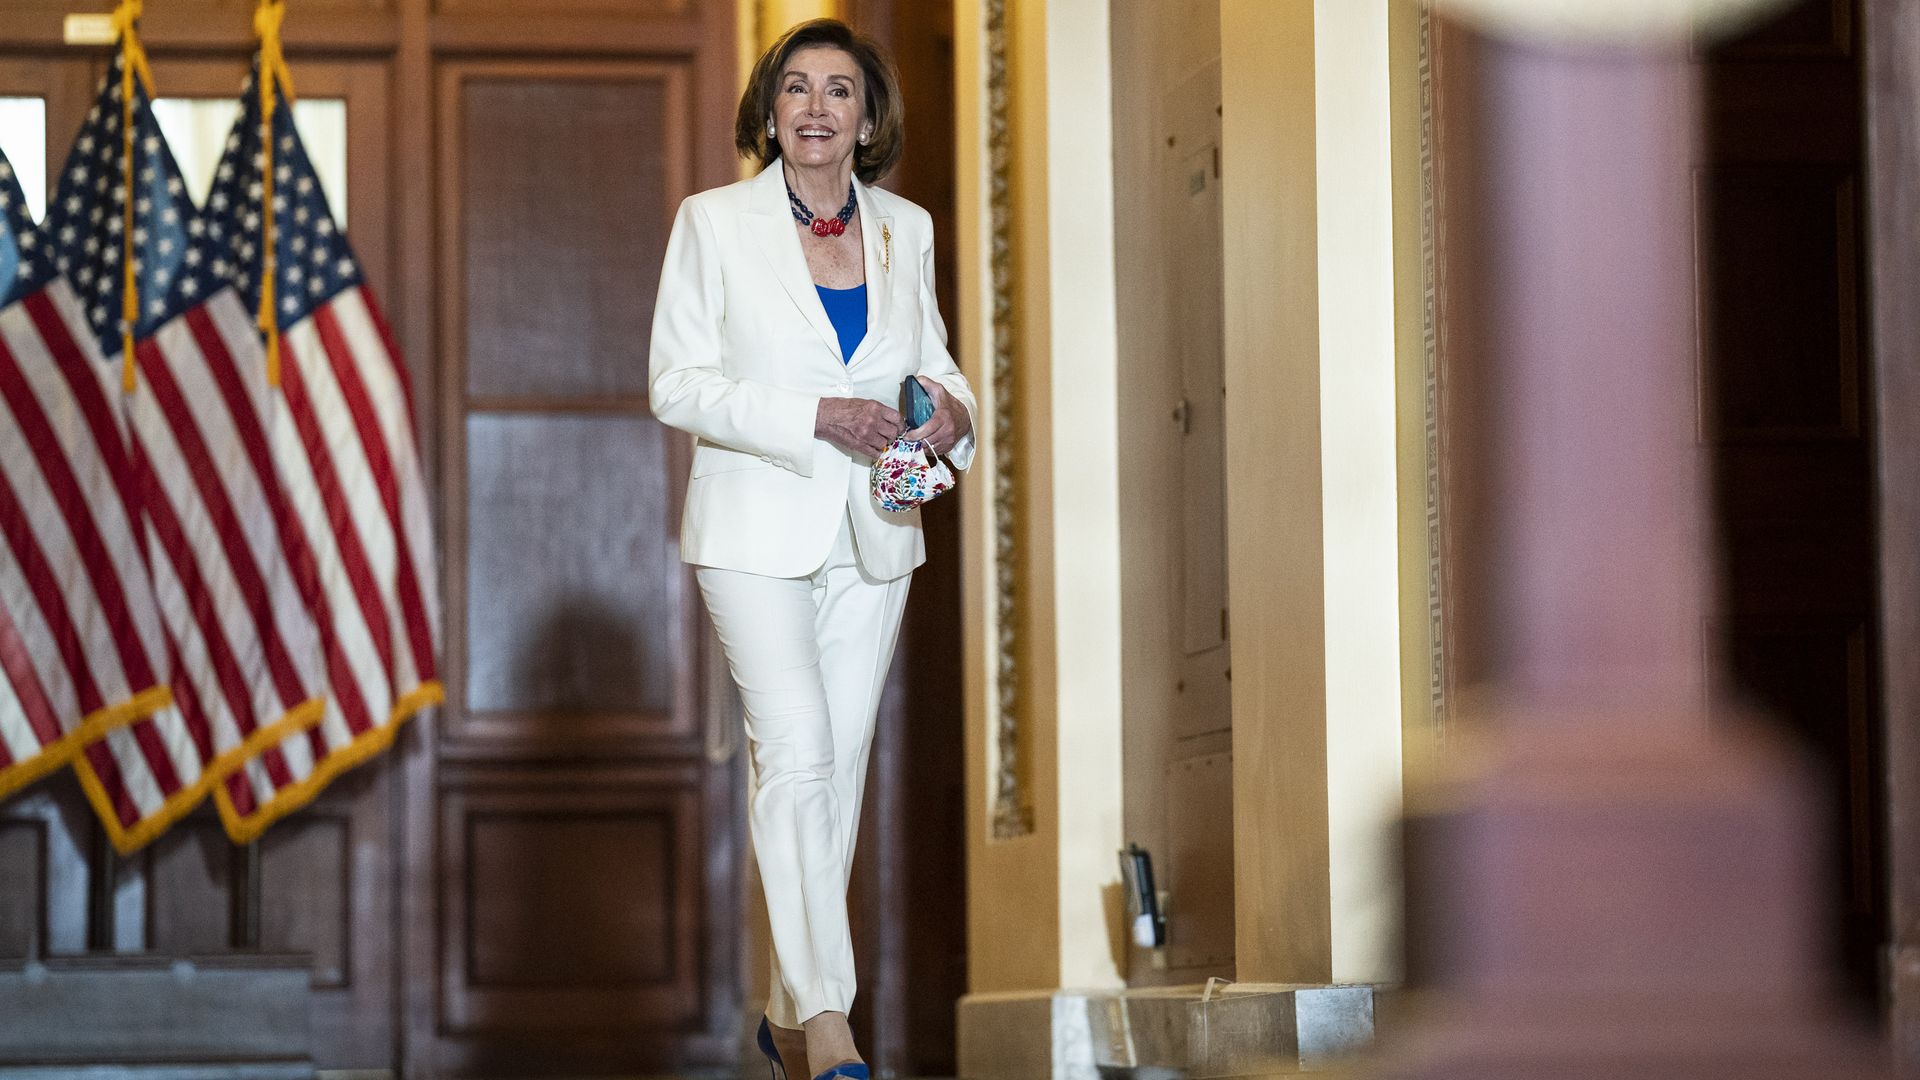 House Speaker Nancy Pelosi is seen smiling as she walks through the U.S. Capitol.